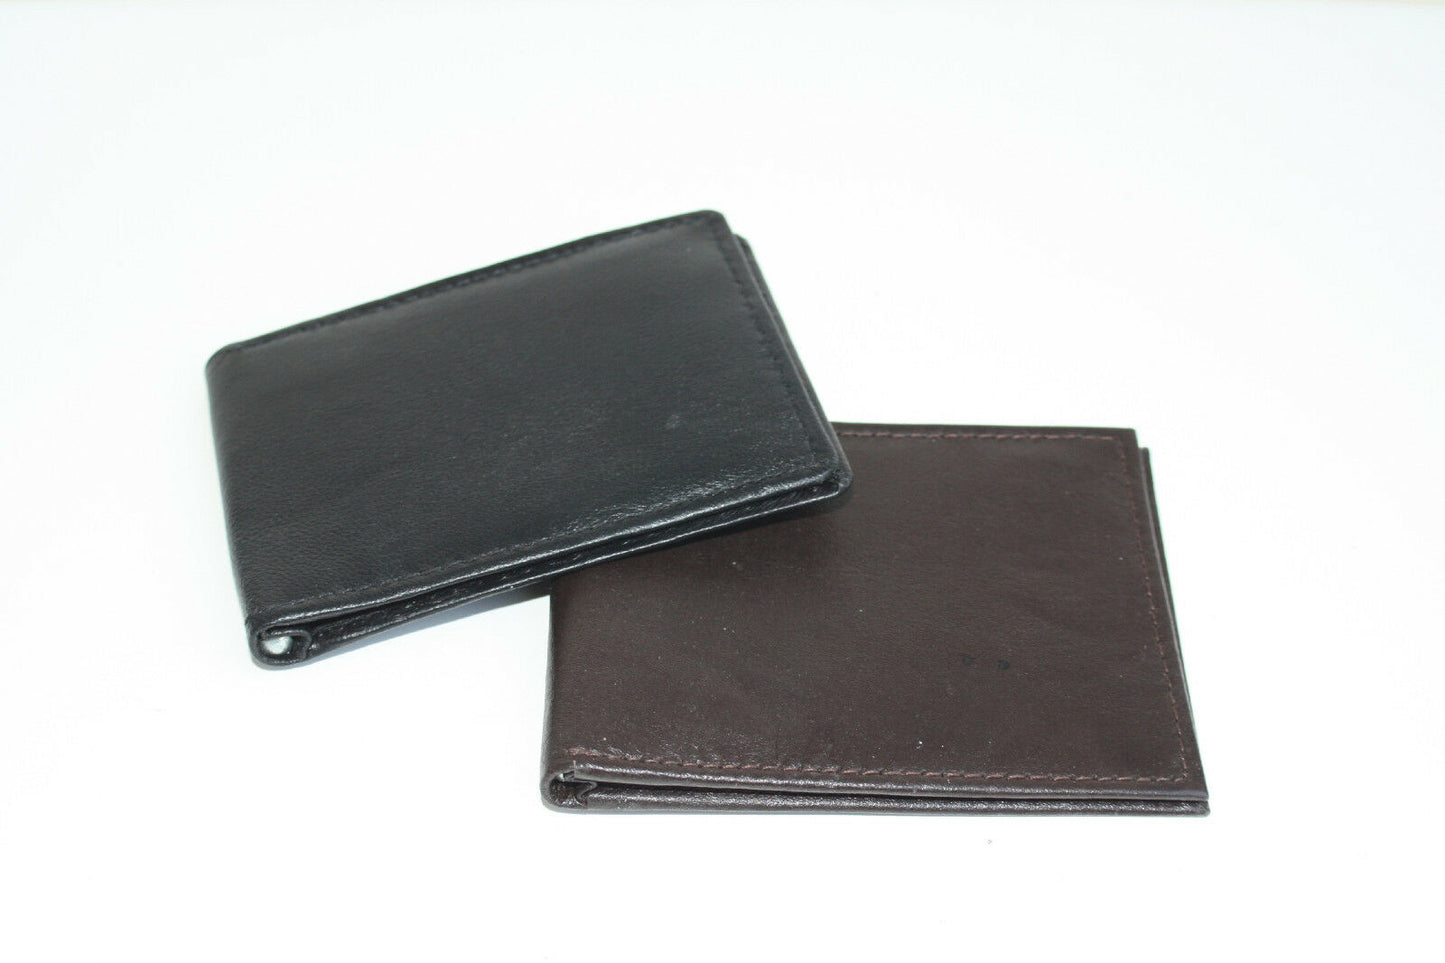 RFID Blocking Leather Men's Bifold Money Clip Wallet ID Credit Card Holder